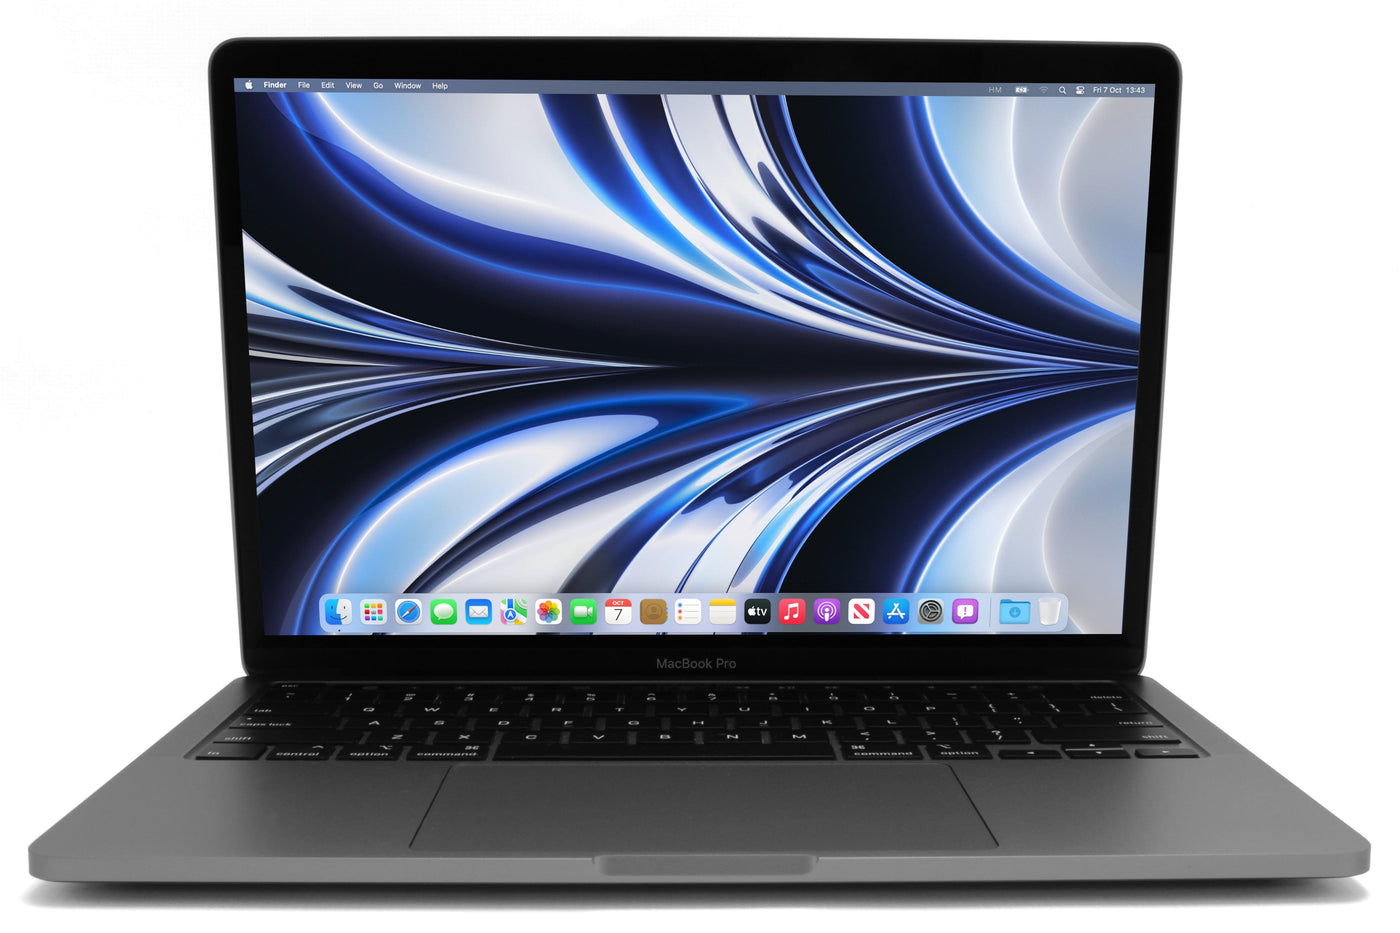 MacBook Pro 13-inch M1 (Space Grey, 2020) - Good